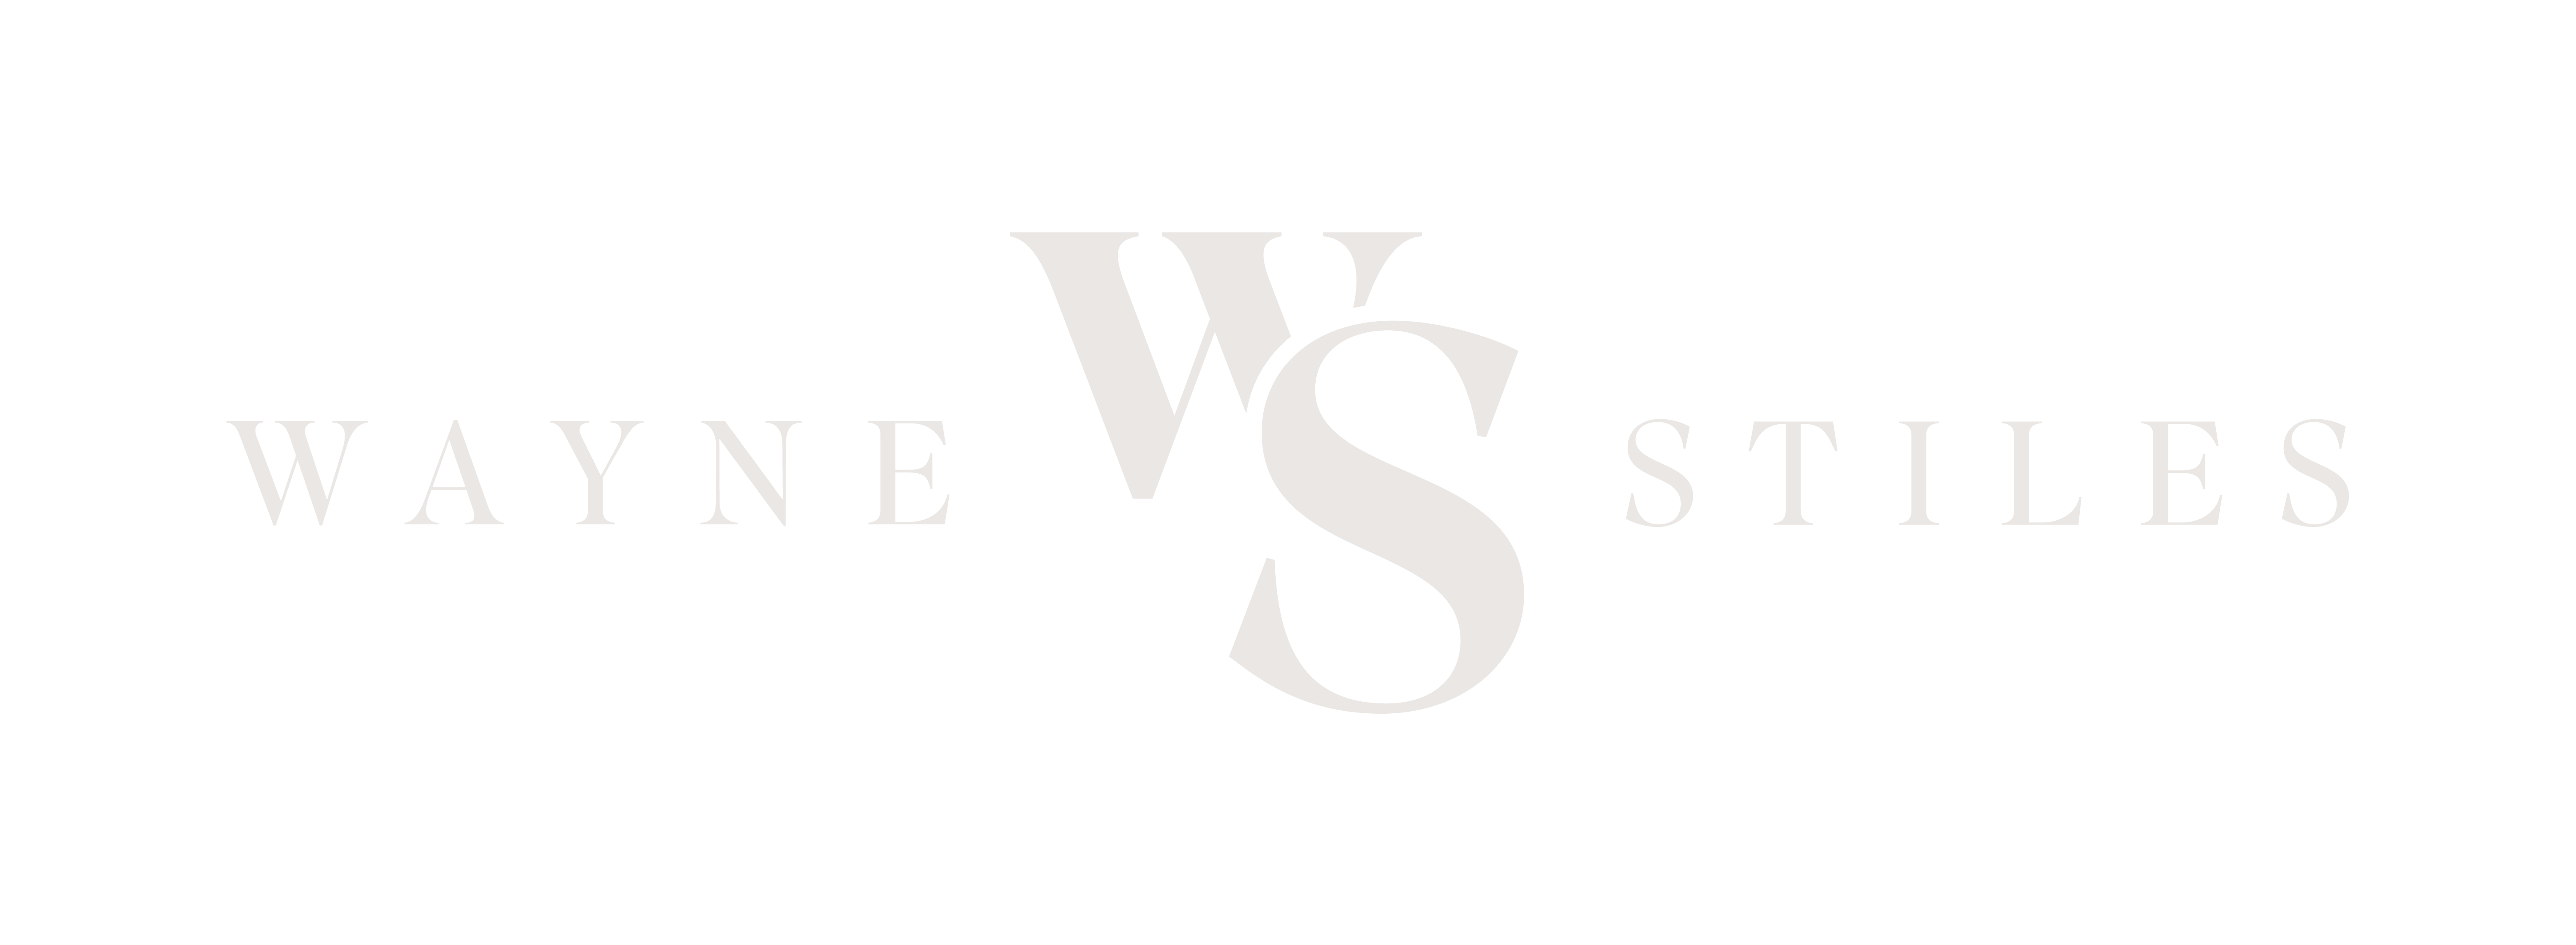 WS_Logomark_Cream-01